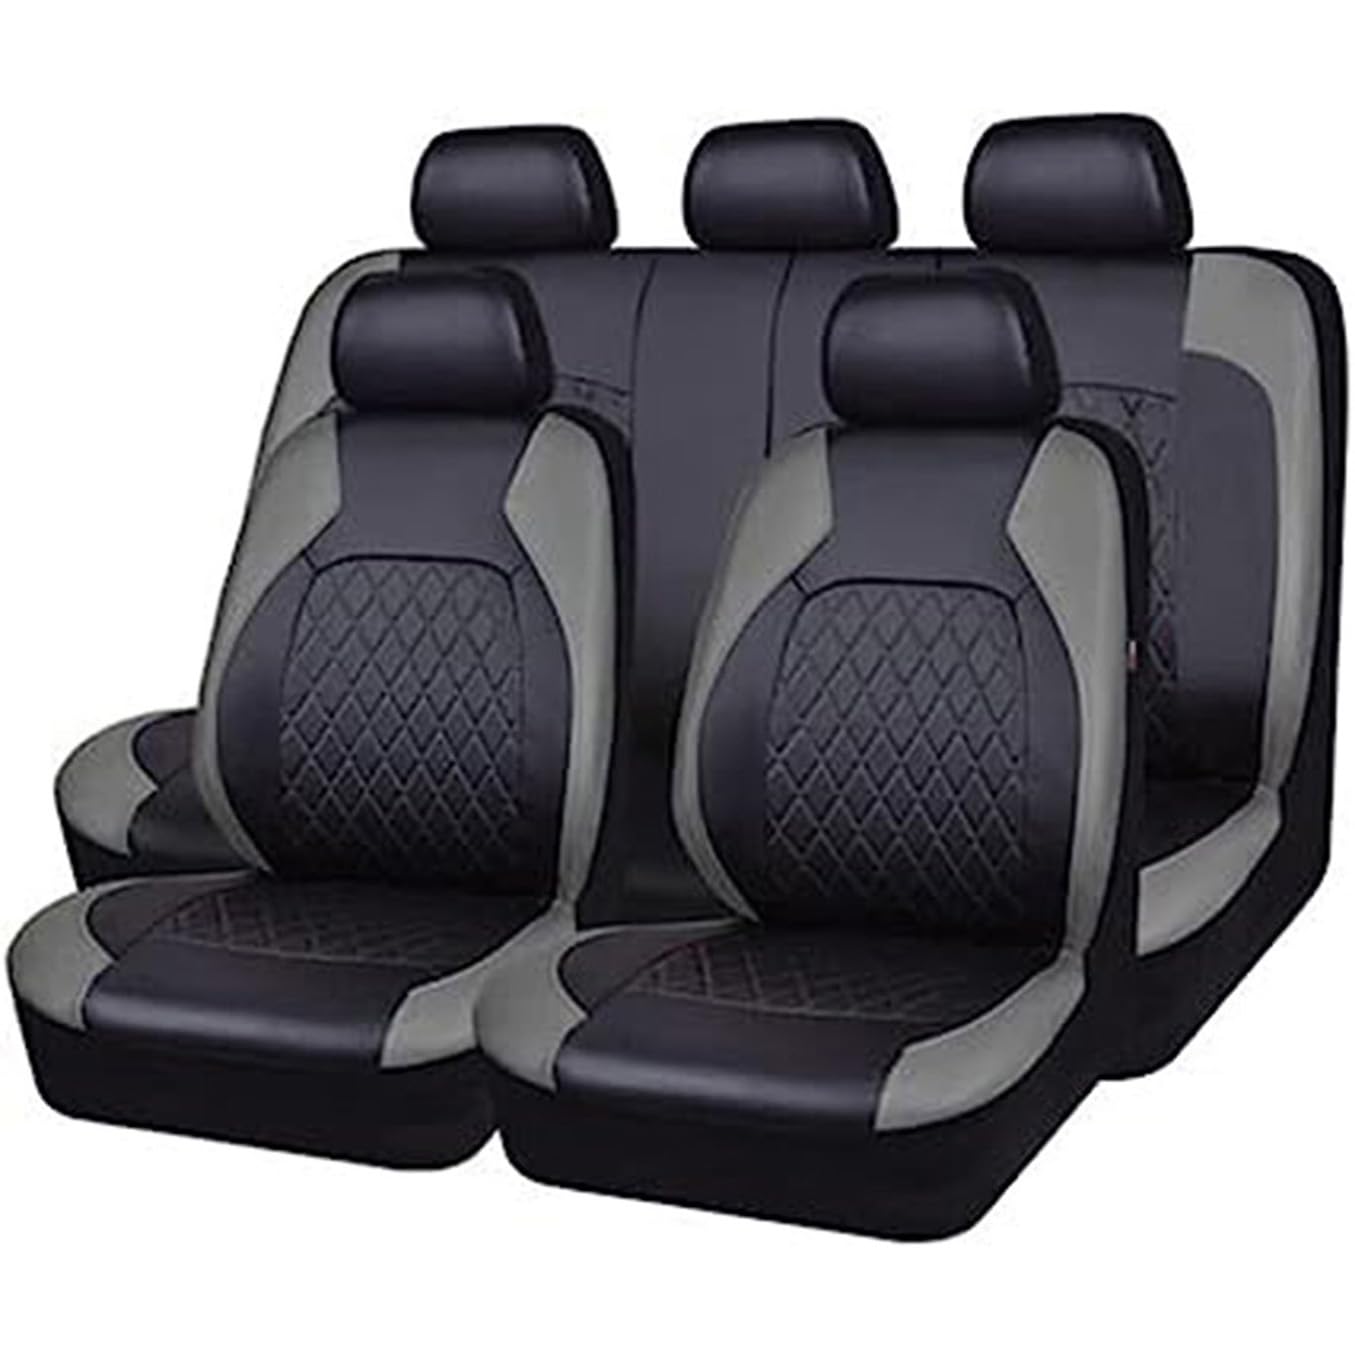 ENDYAK Auto-Sitzbezug für Hyundai Santa Fe TM/DM/cm/SM 2001-2016 2017 2018 2019 2020 2021 2022 2023 2024 2025, 9-teiliges Set Sitzbezug Komplett-Set, wasserdichte Autositzschoner aus Leder von ENDYAK